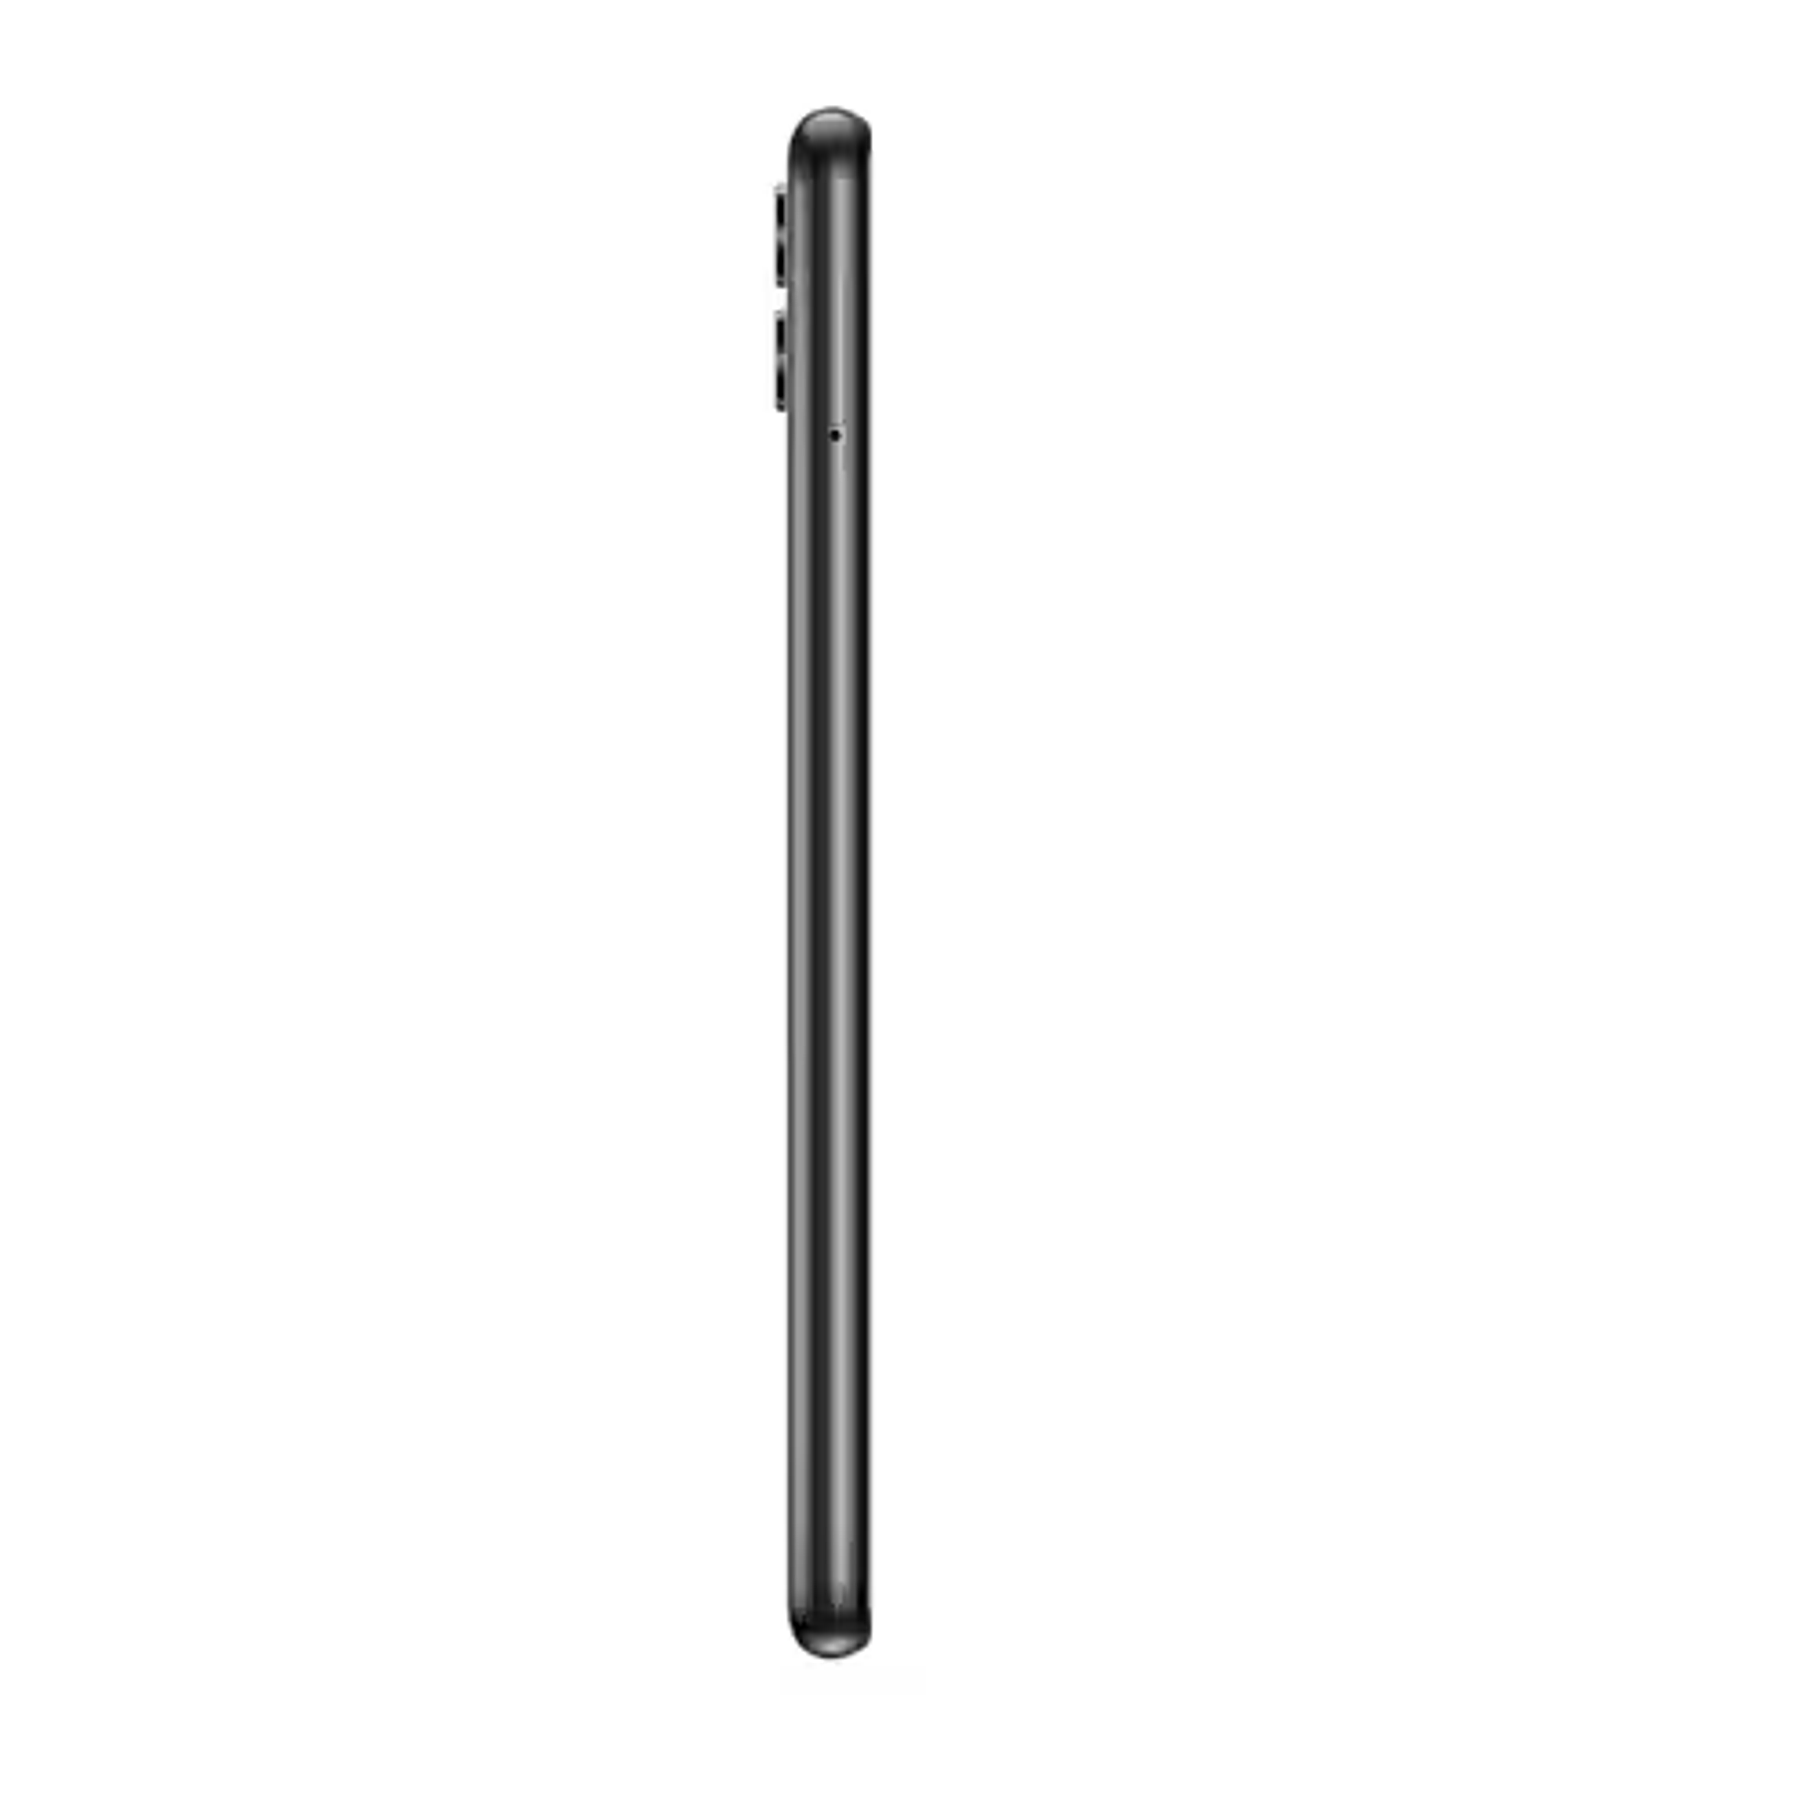 Samsung Galaxy A04 Celular 6.4 Pulgadas 128GB Negro